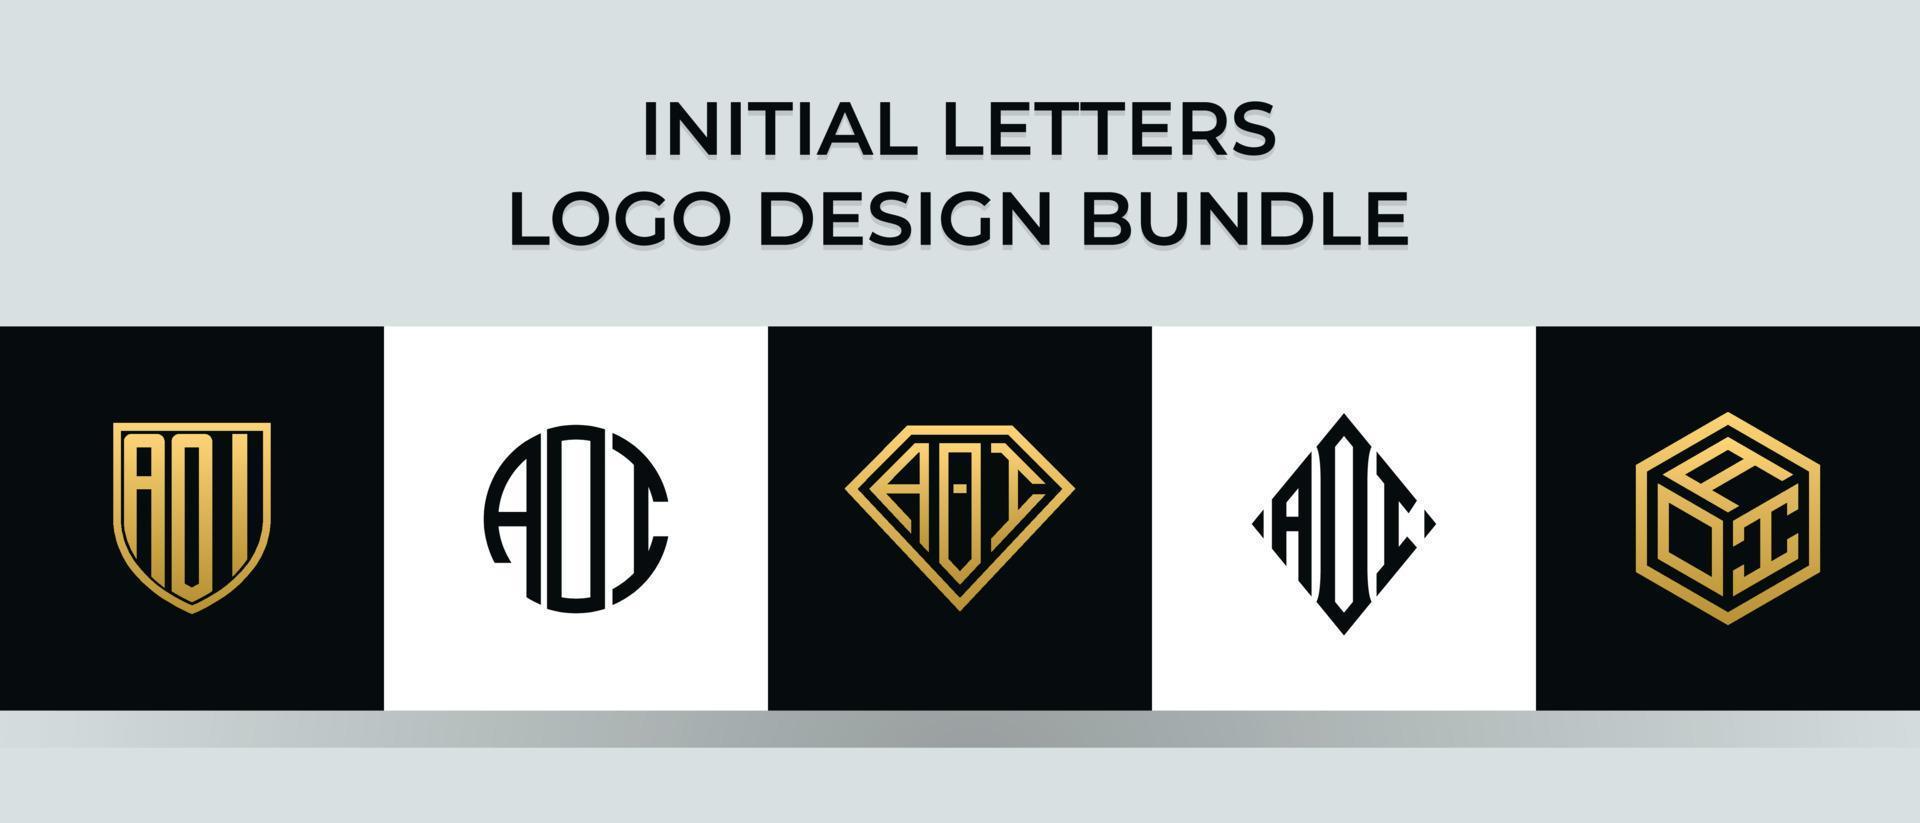 letras iniciales aoi logo diseños paquete vector